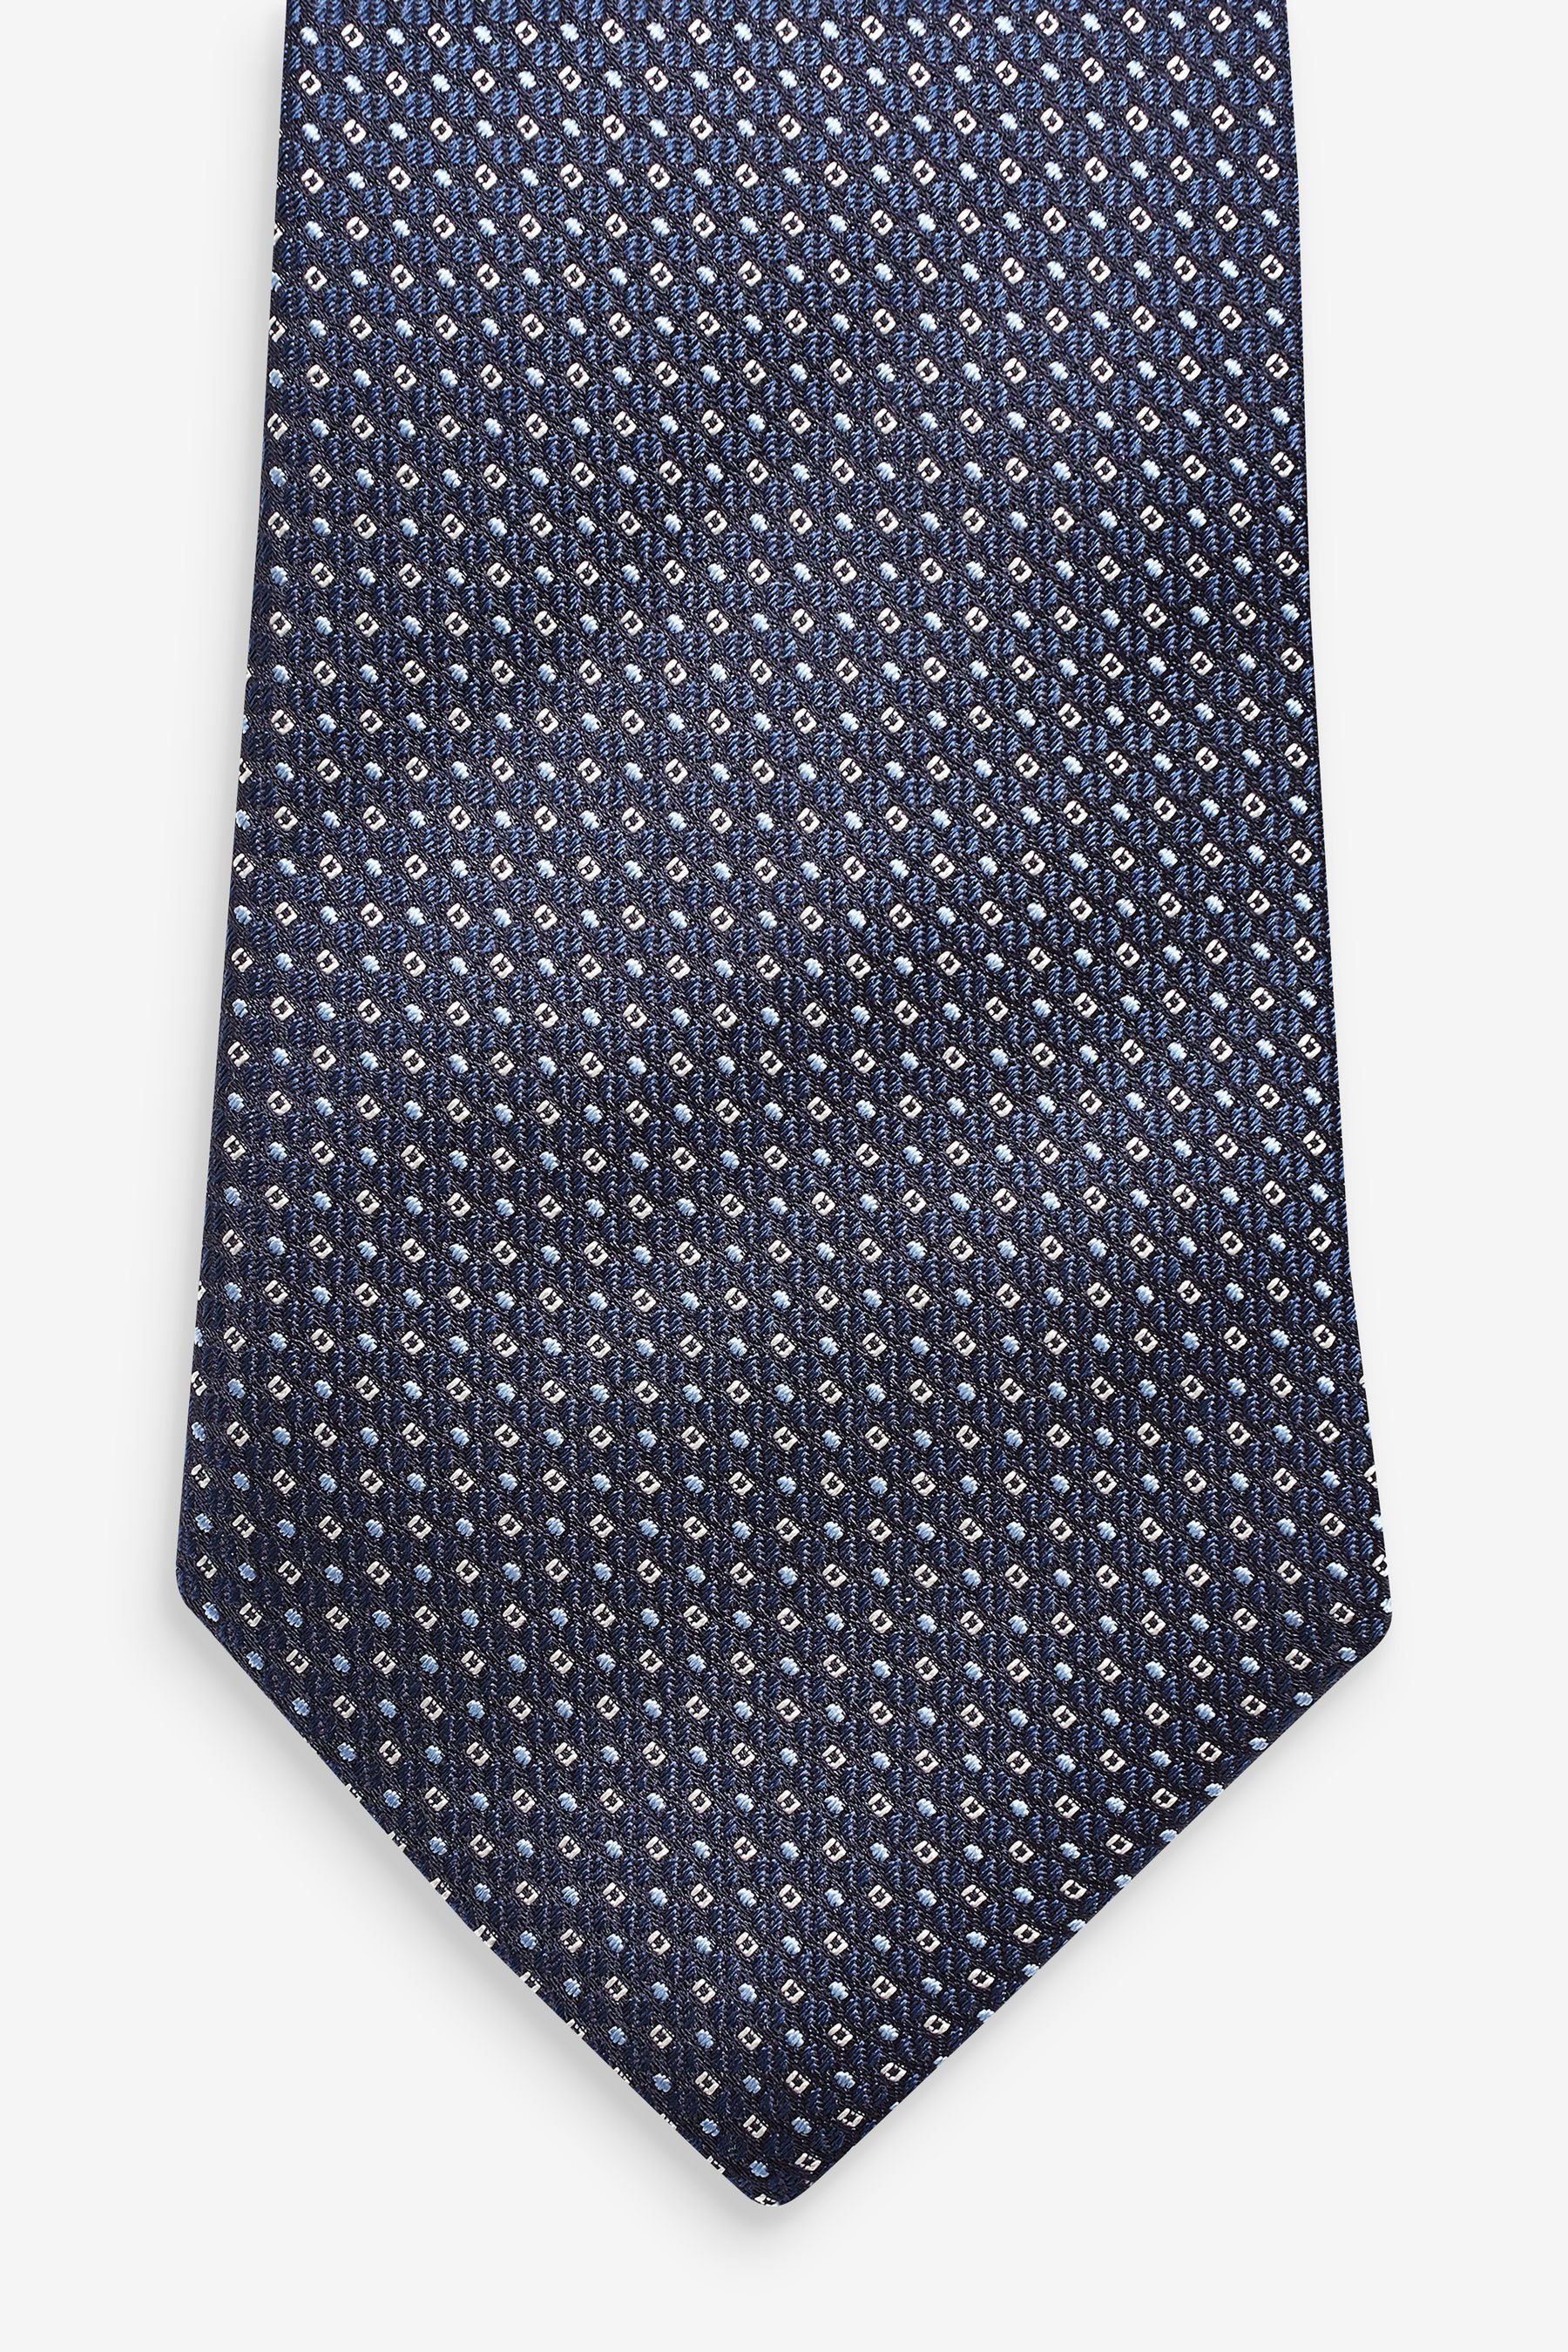 Blue Pattern Italy" "Made Signature-Krawatte Navy Next (1-St) in Krawatte